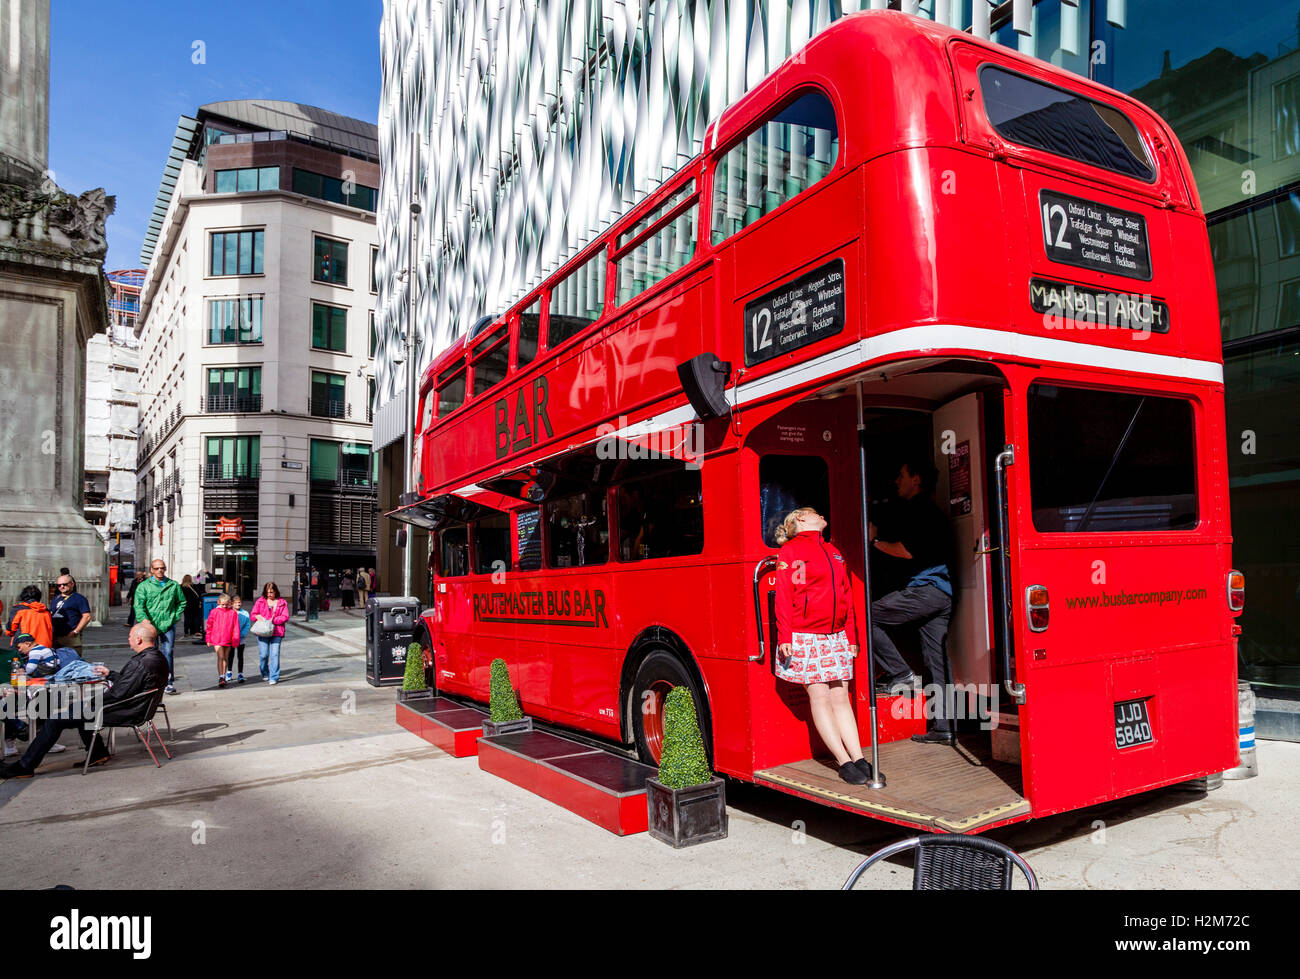 Routemaster Bus Bar vor dem Denkmal, London, UK Stockfoto